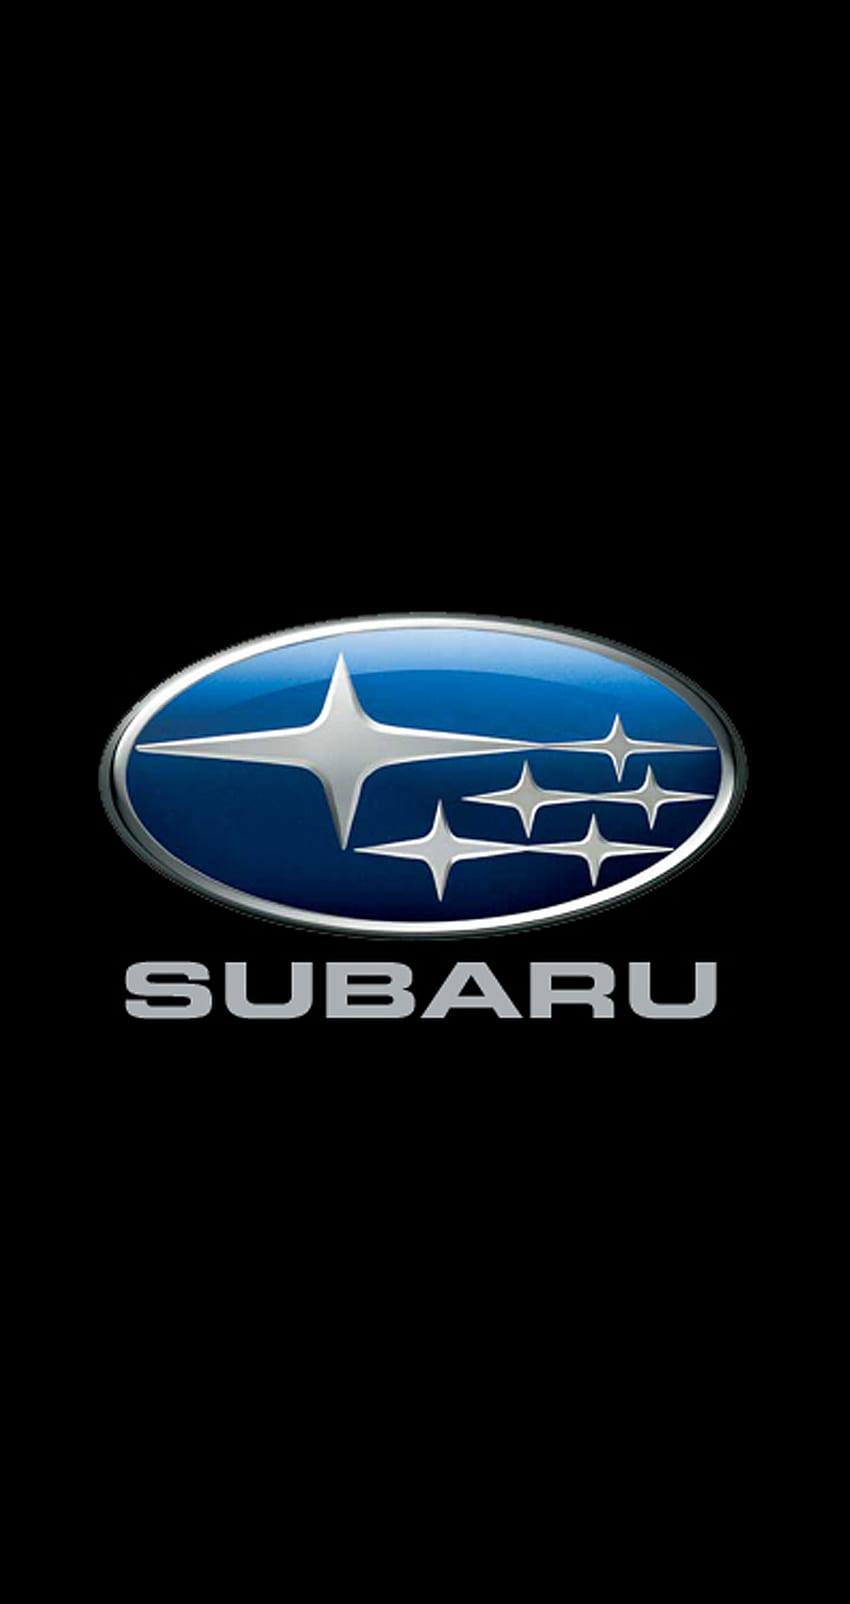 Share Subaru iPhone 6 852 x 1608 - 4393712 - car rally subaru. mobile9, Subaru 6 Plus HD phone wallpaper